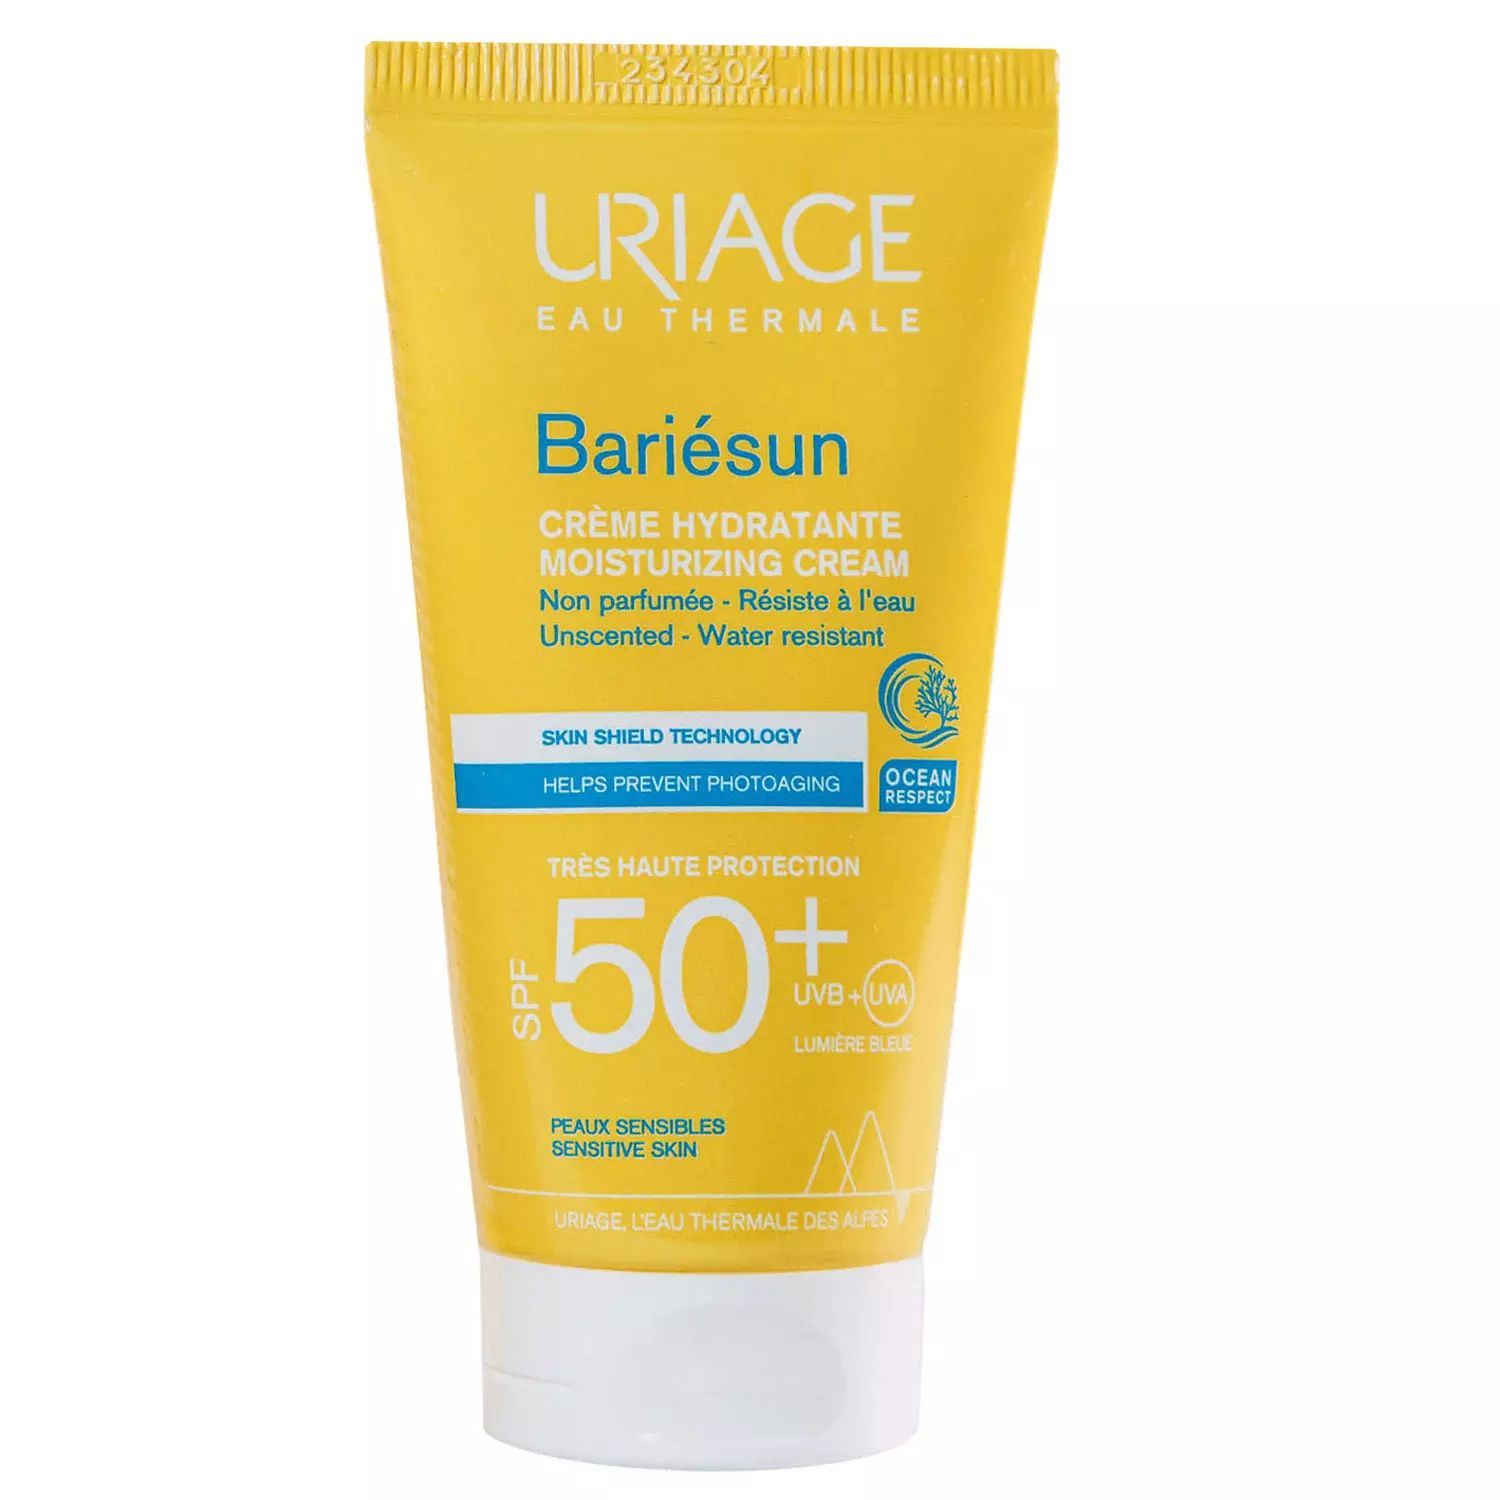 Увлажняющий крем Uriage Bariesun Creme Hydratante SPF 50+, 50 мл uriage увлажняющий крем moisturizing cream spf 50 50 мл uriage bariesun